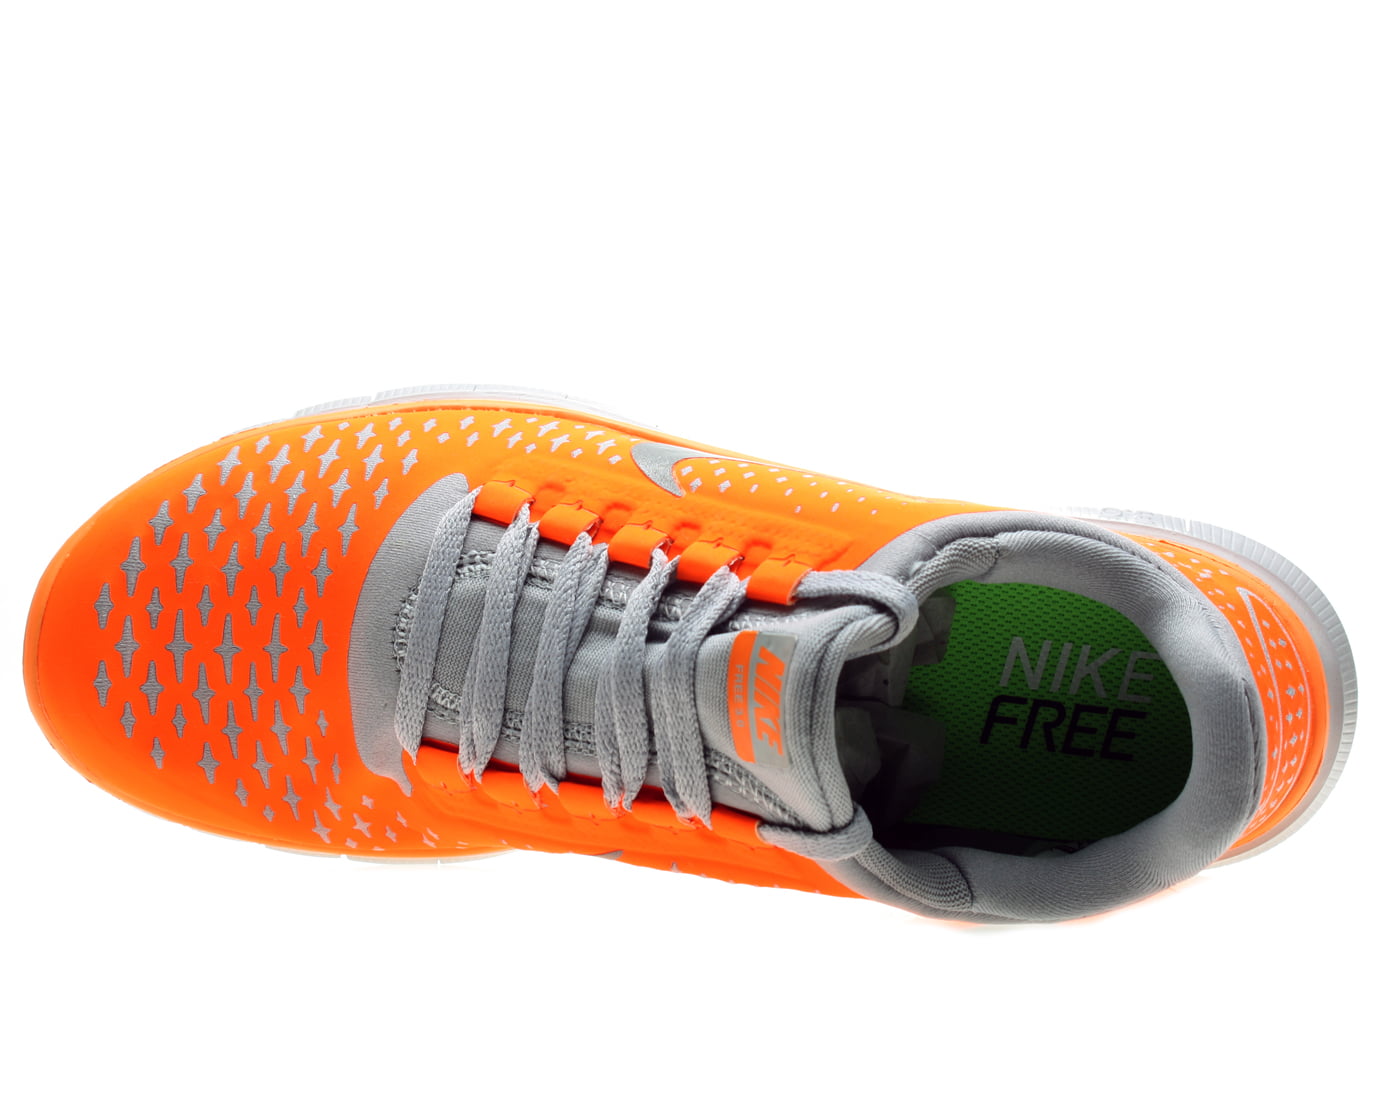 Nike Free V4 Running Shoes Size 11.5 - Walmart.com